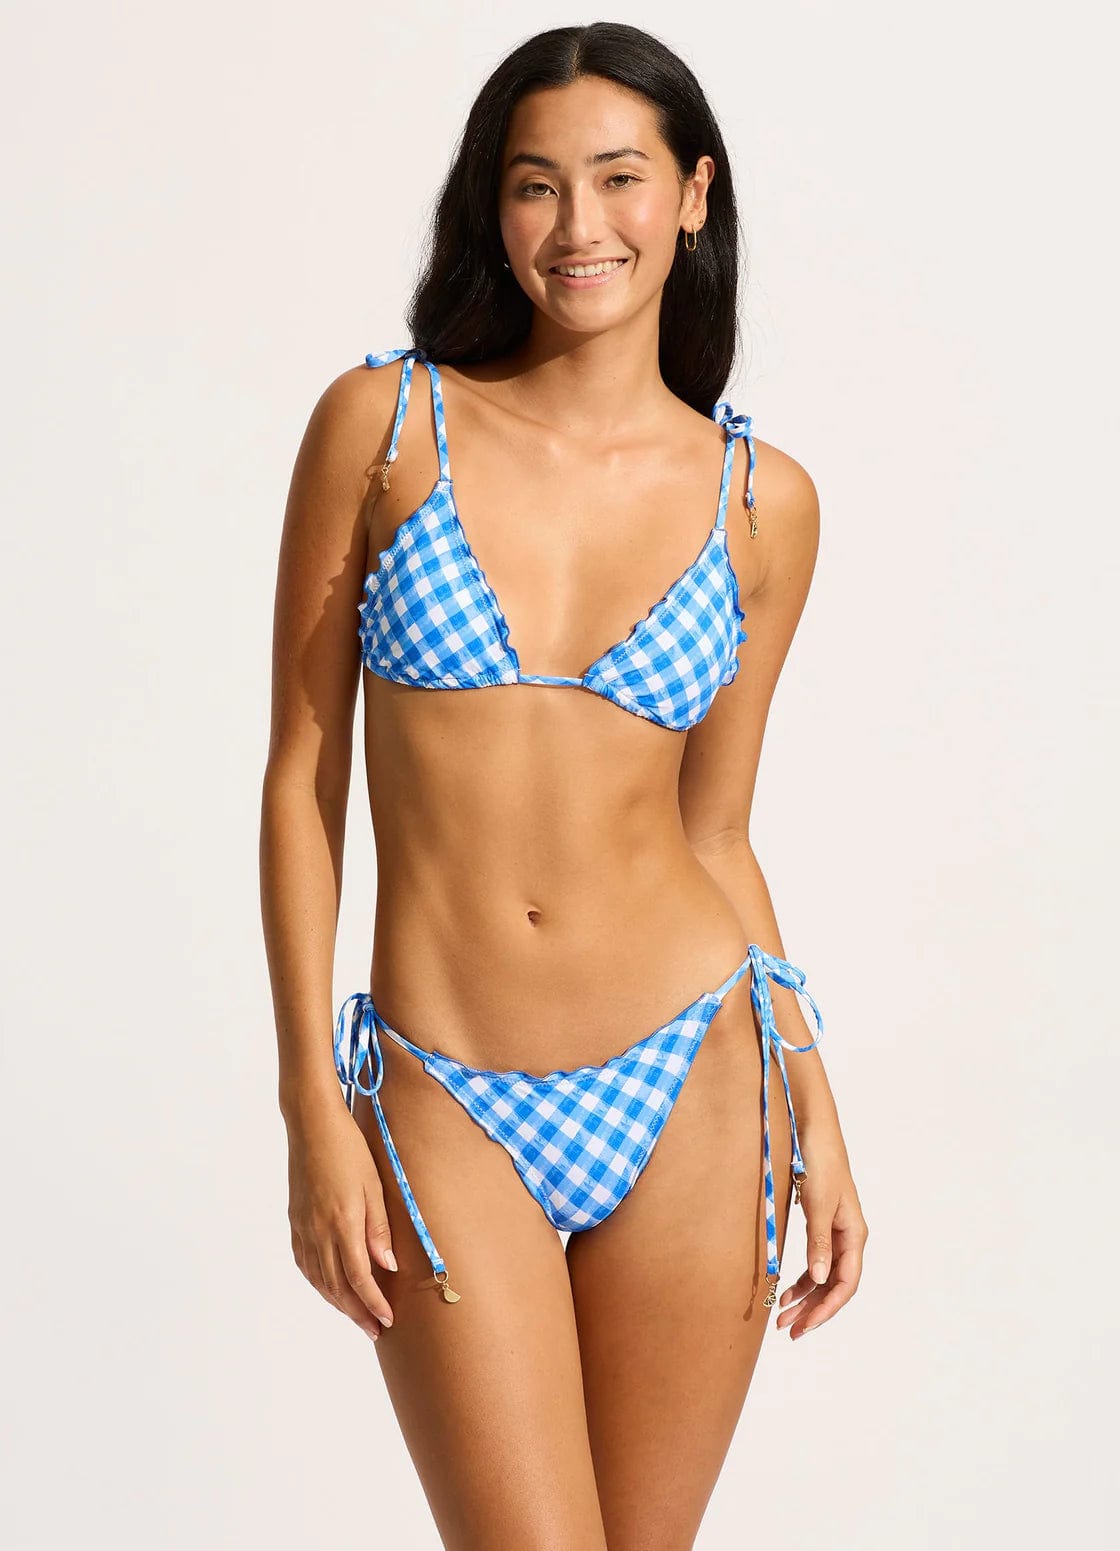 Ciao Bella Check Slide Triangle Bikini Top - Azure - Seafolly - Splash Swimwear  - Bikini Tops, May24, new arrivals, Seafolly, Womens, womens swim - Splash Swimwear 